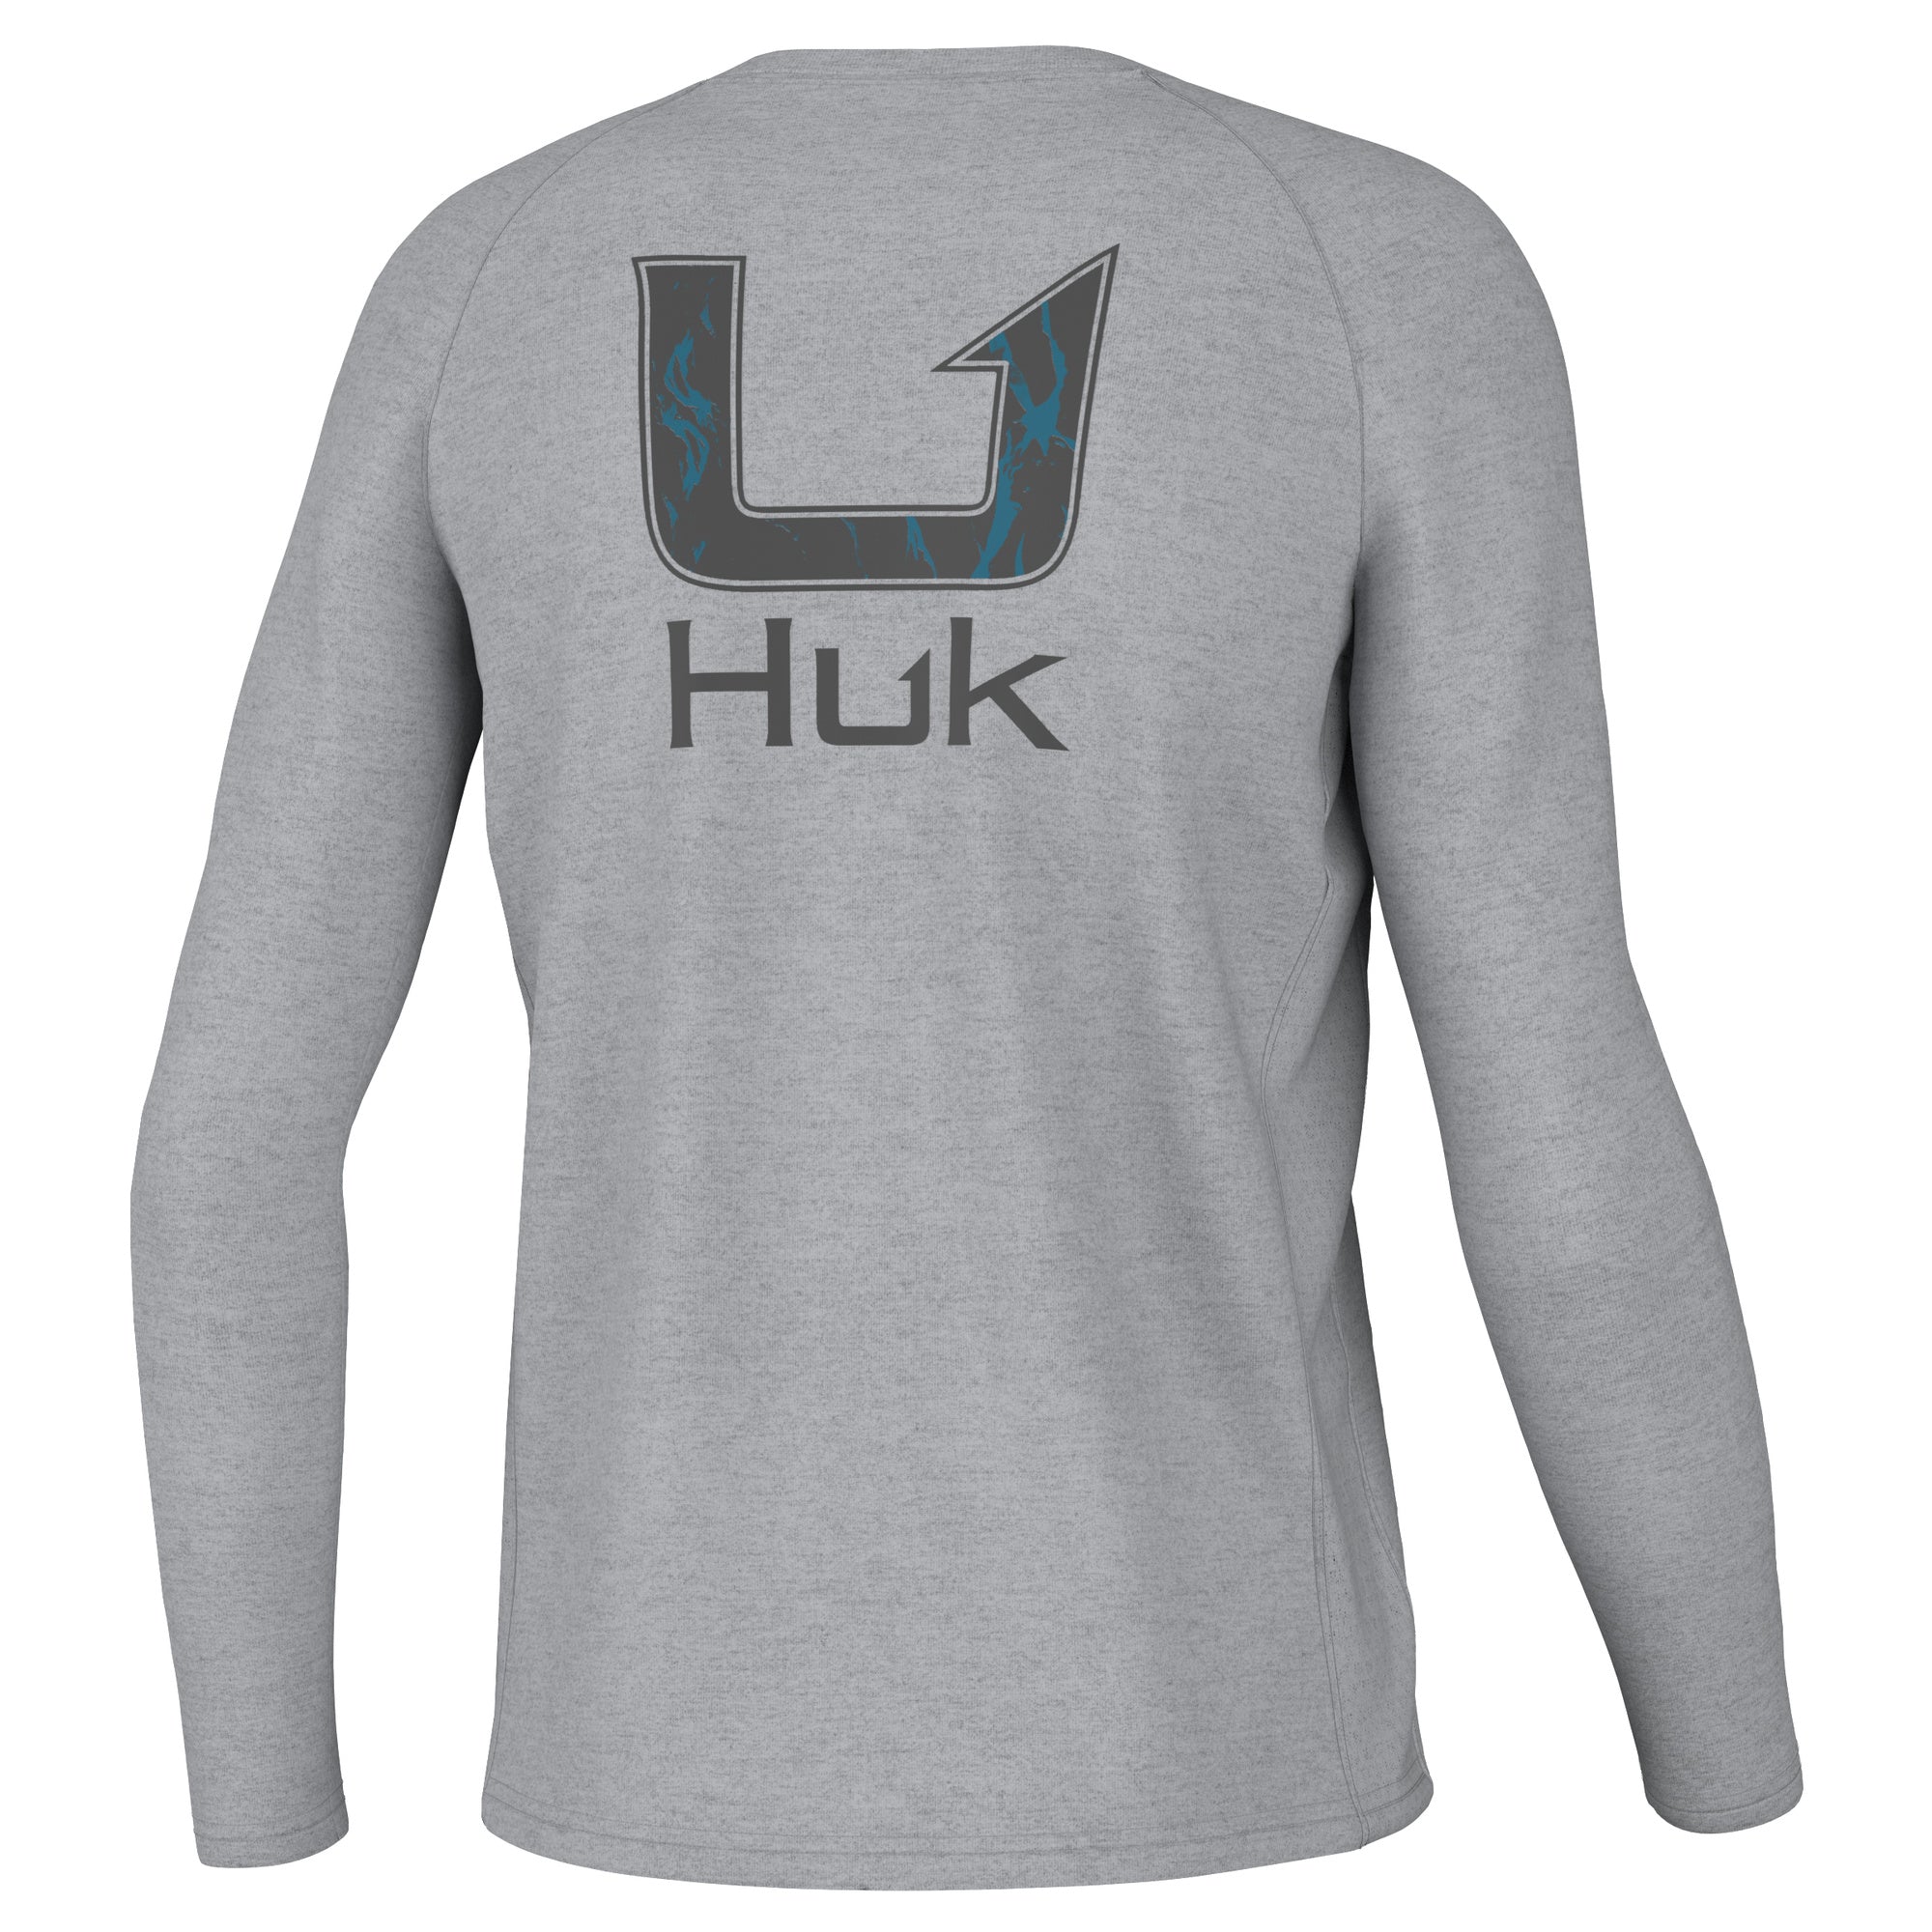 HUK Kids' Sun Protection Long Sleeve Shirt - Flare UK